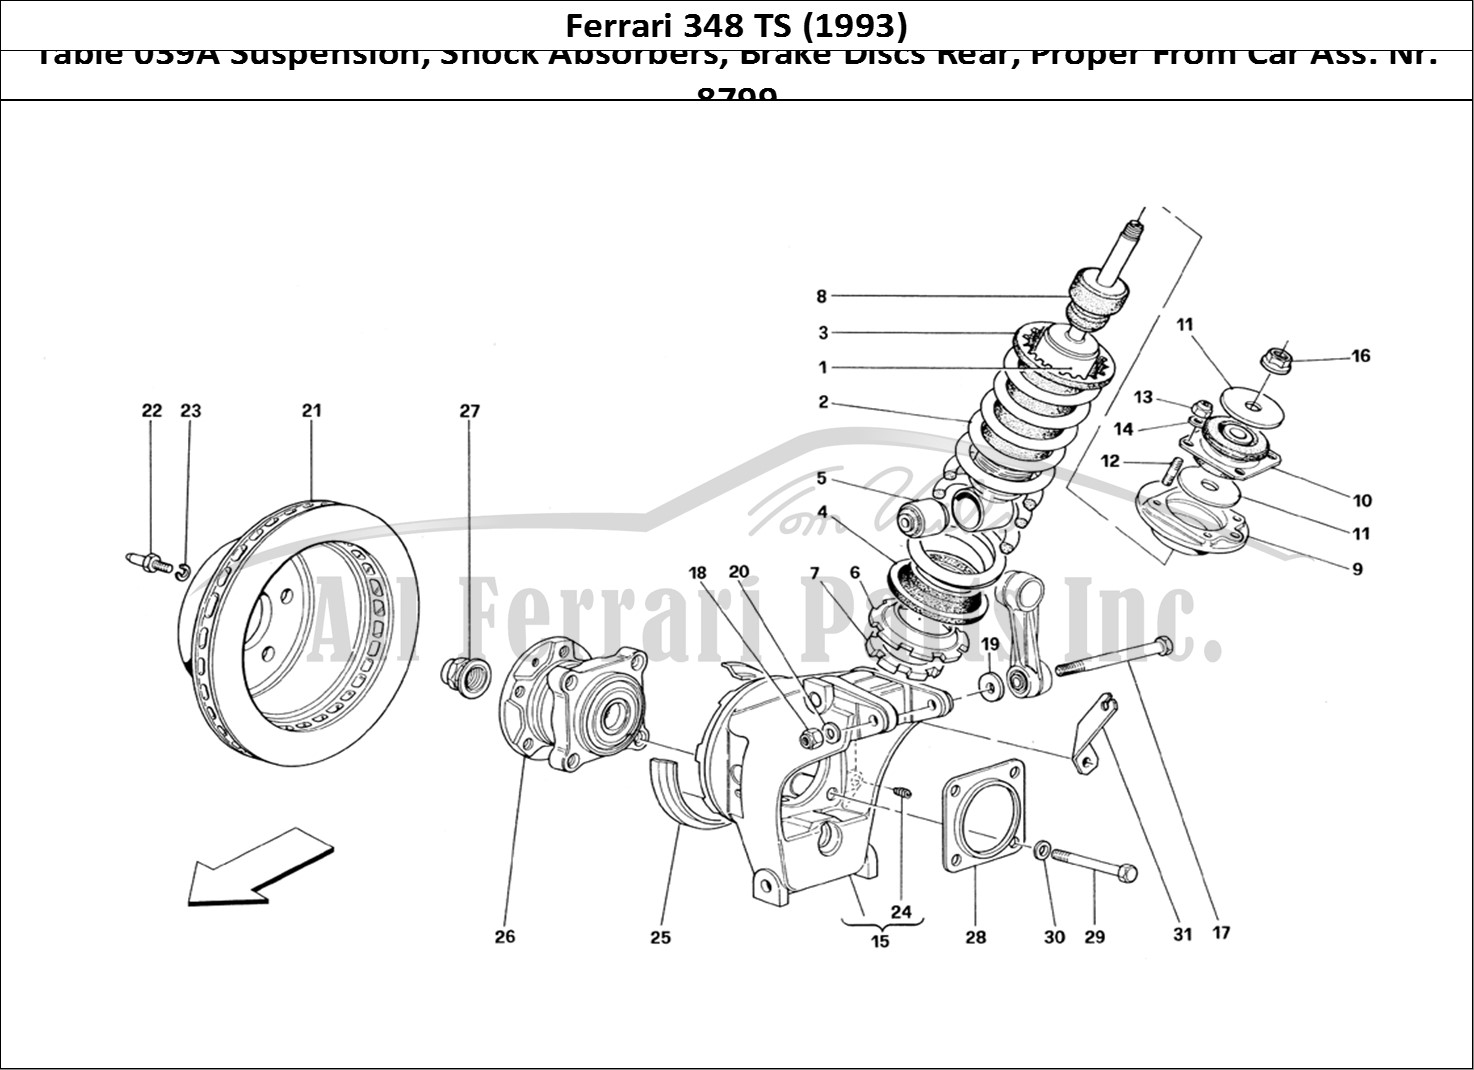 Ferrari Parts Ferrari 348 TB (1993) Page 039 Rear Suspension - Shock A